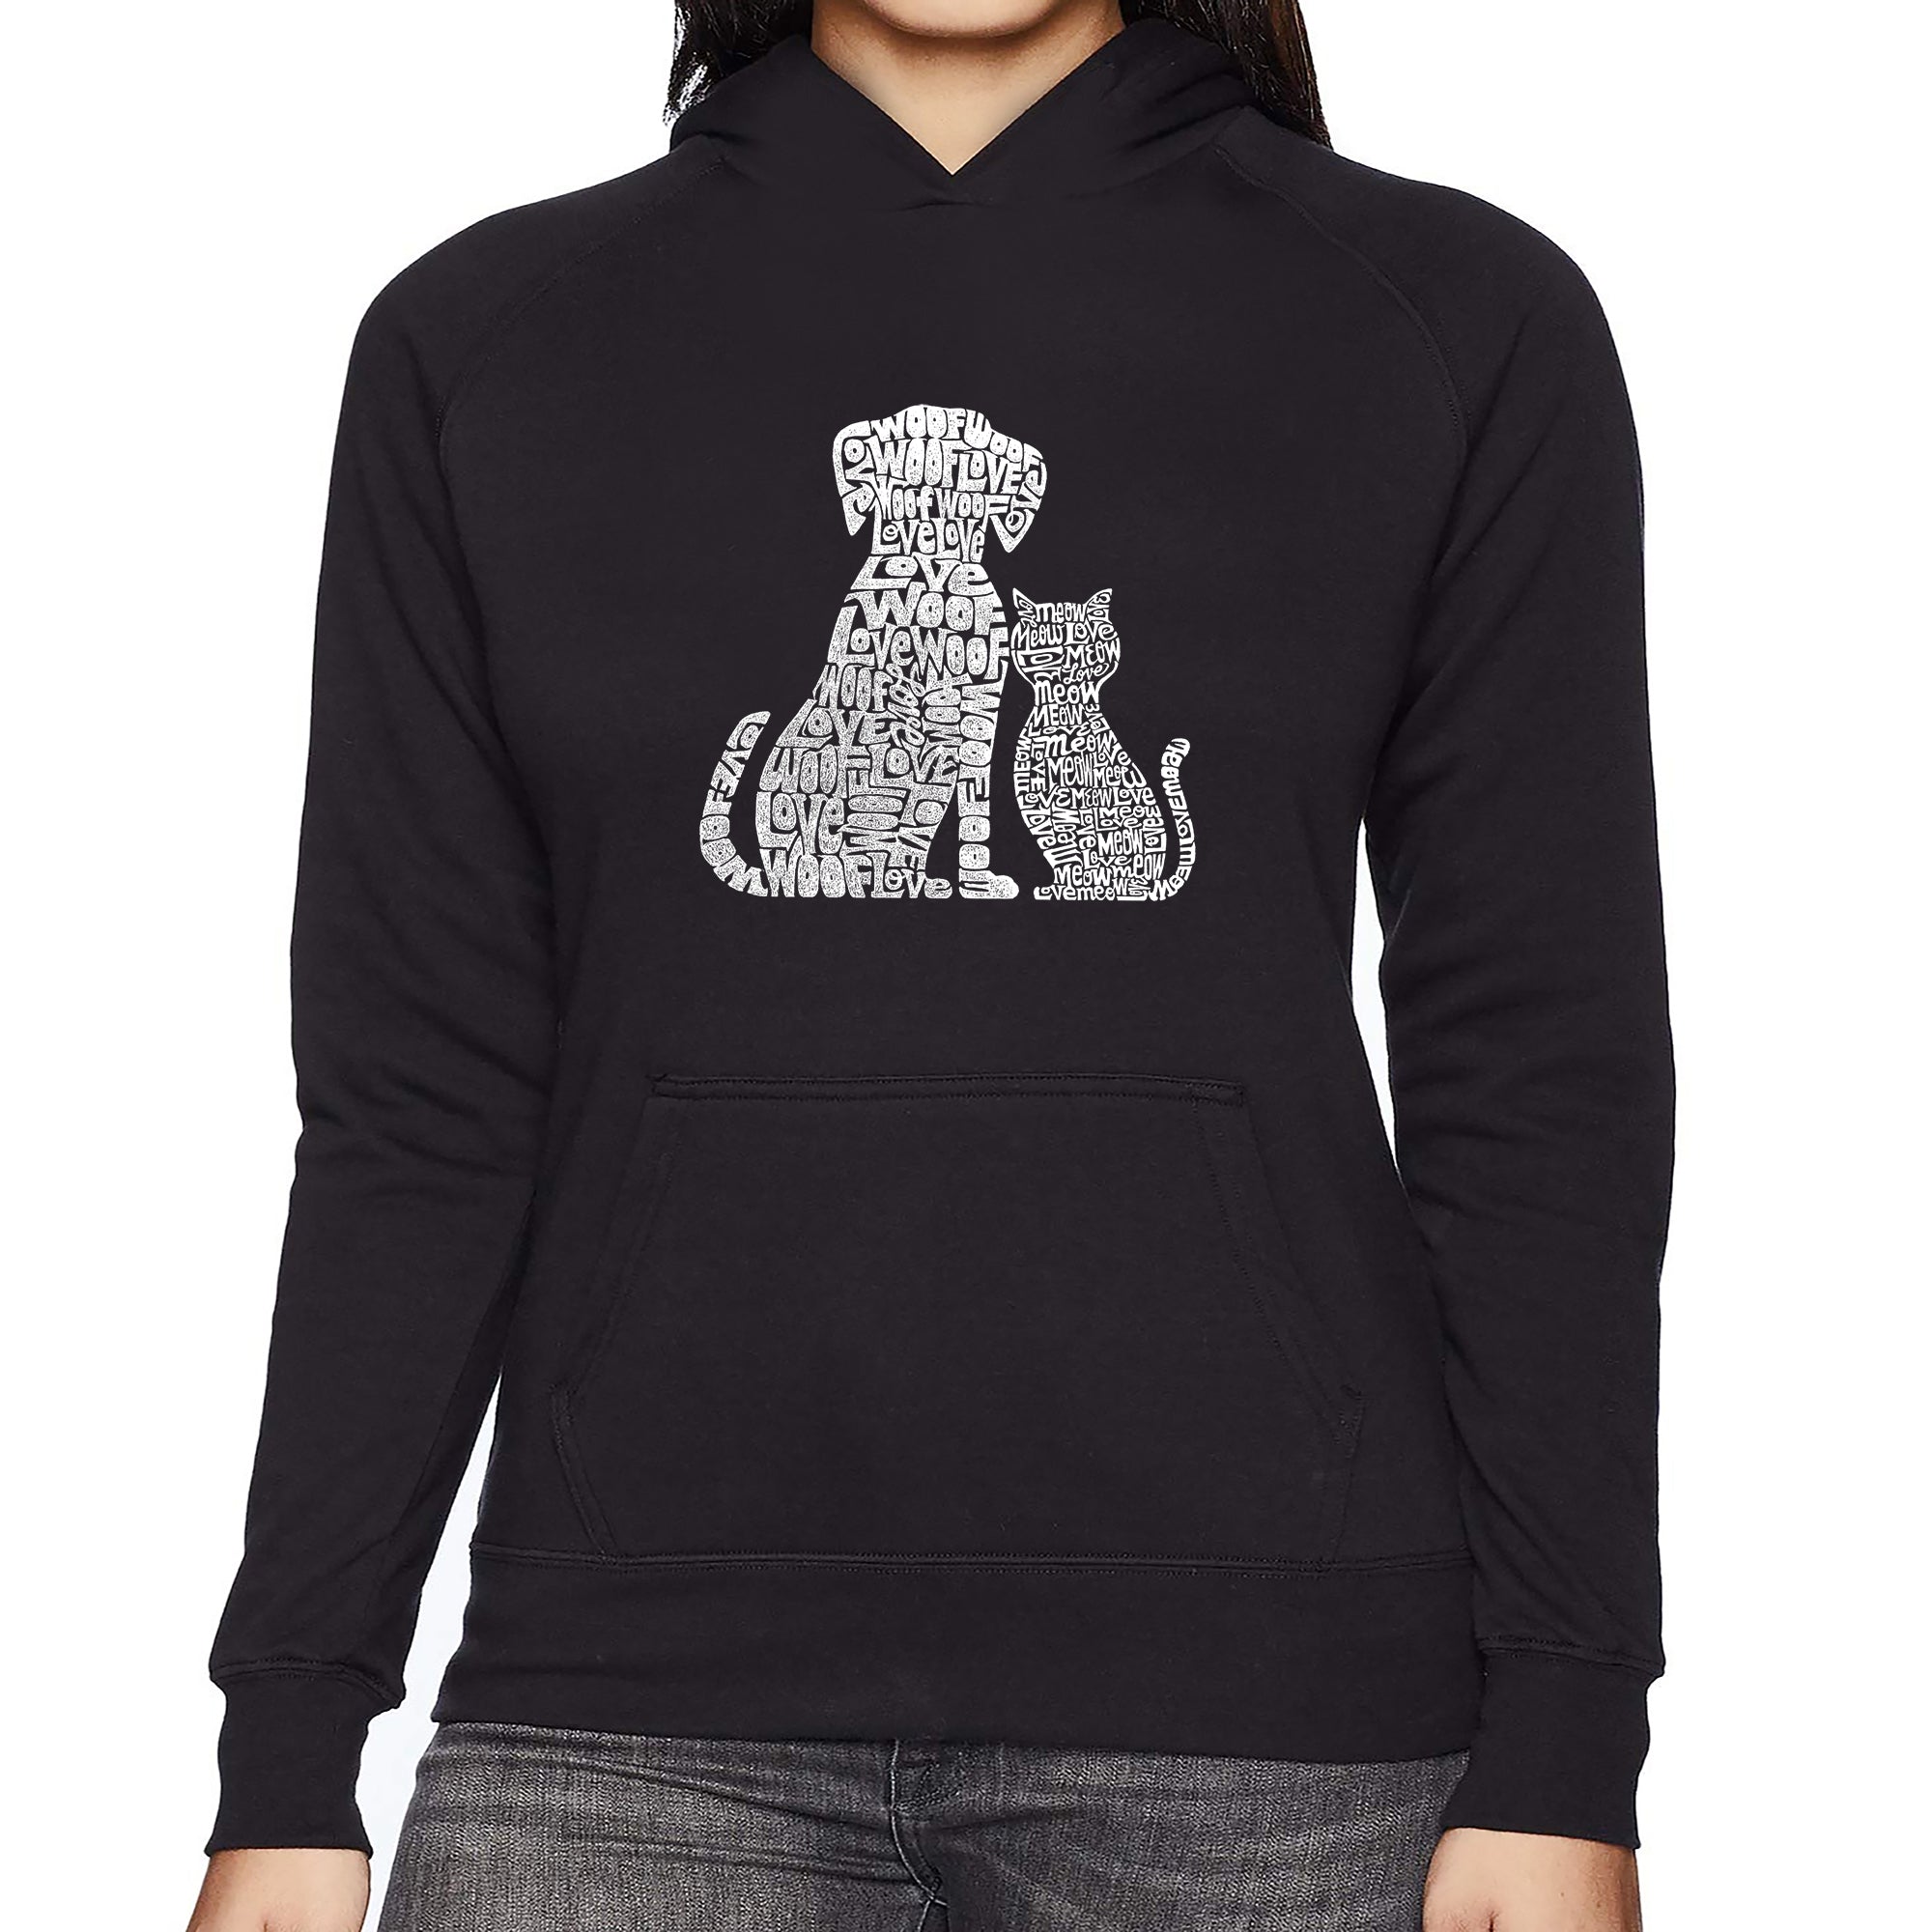 Dogs And Cats - Women's Word Art Hooded Sweatshirt - Black - Medium